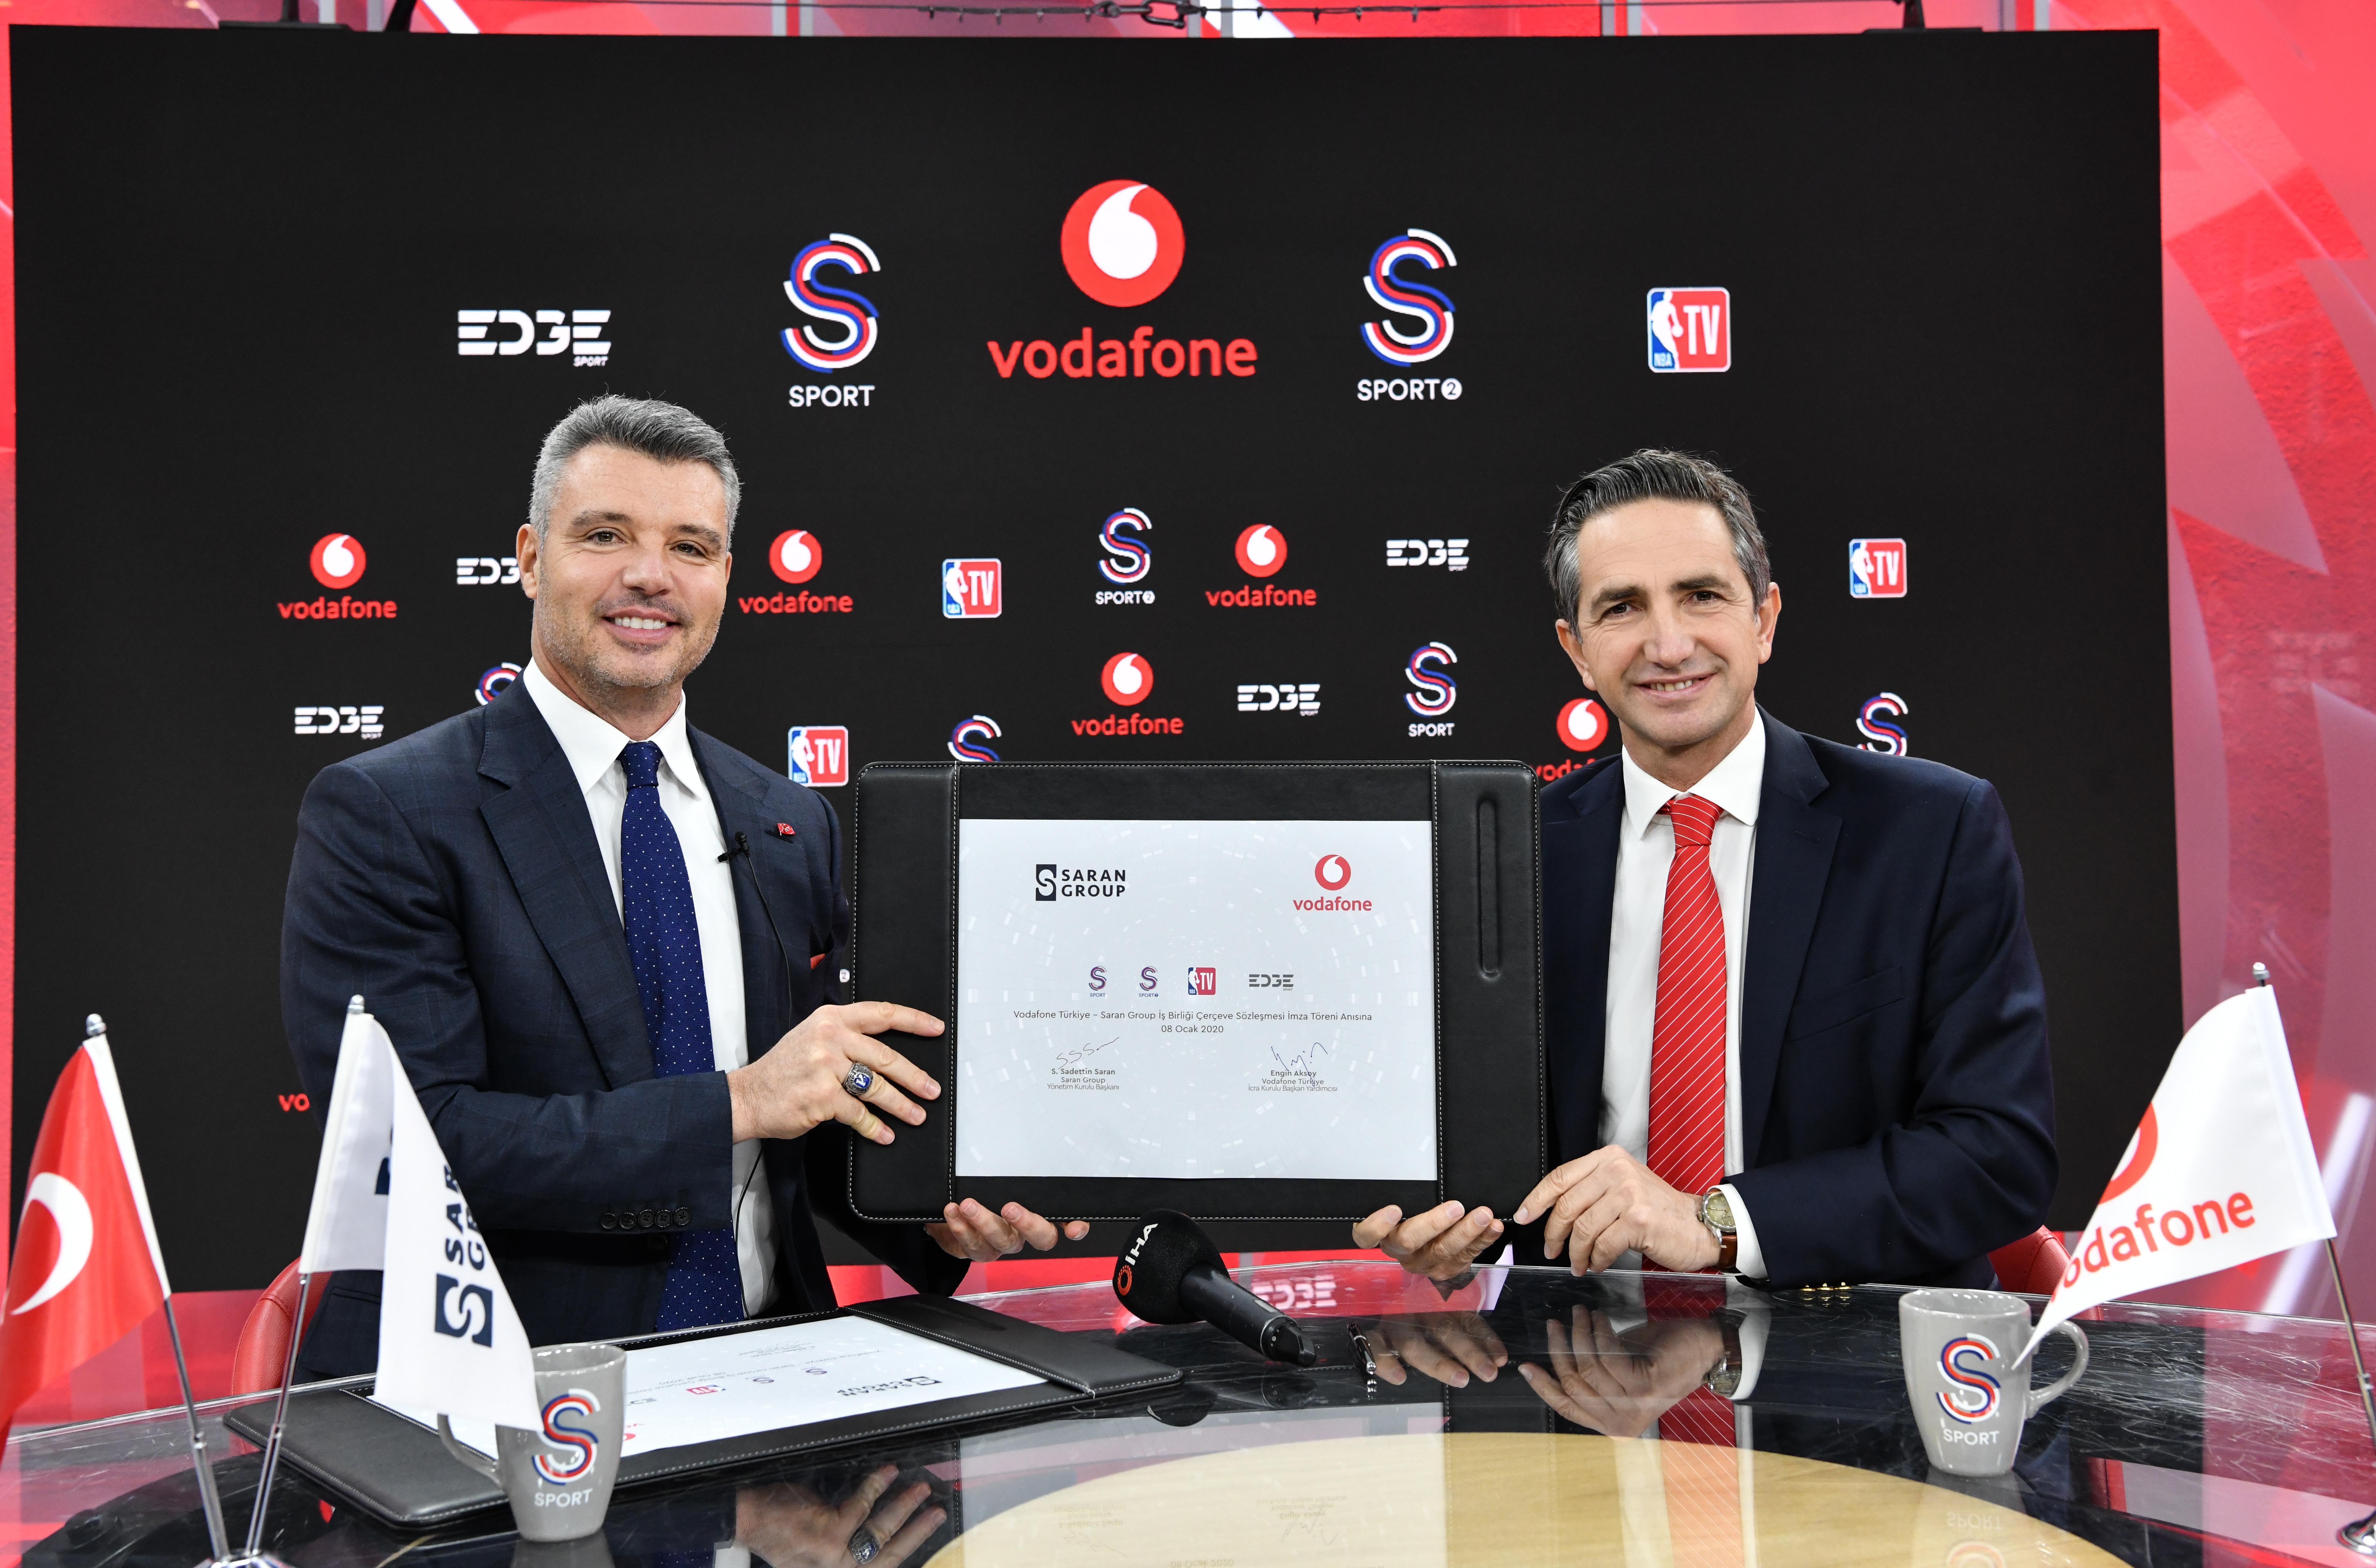 Vodafone TVden sporseverlere müjdeli haber